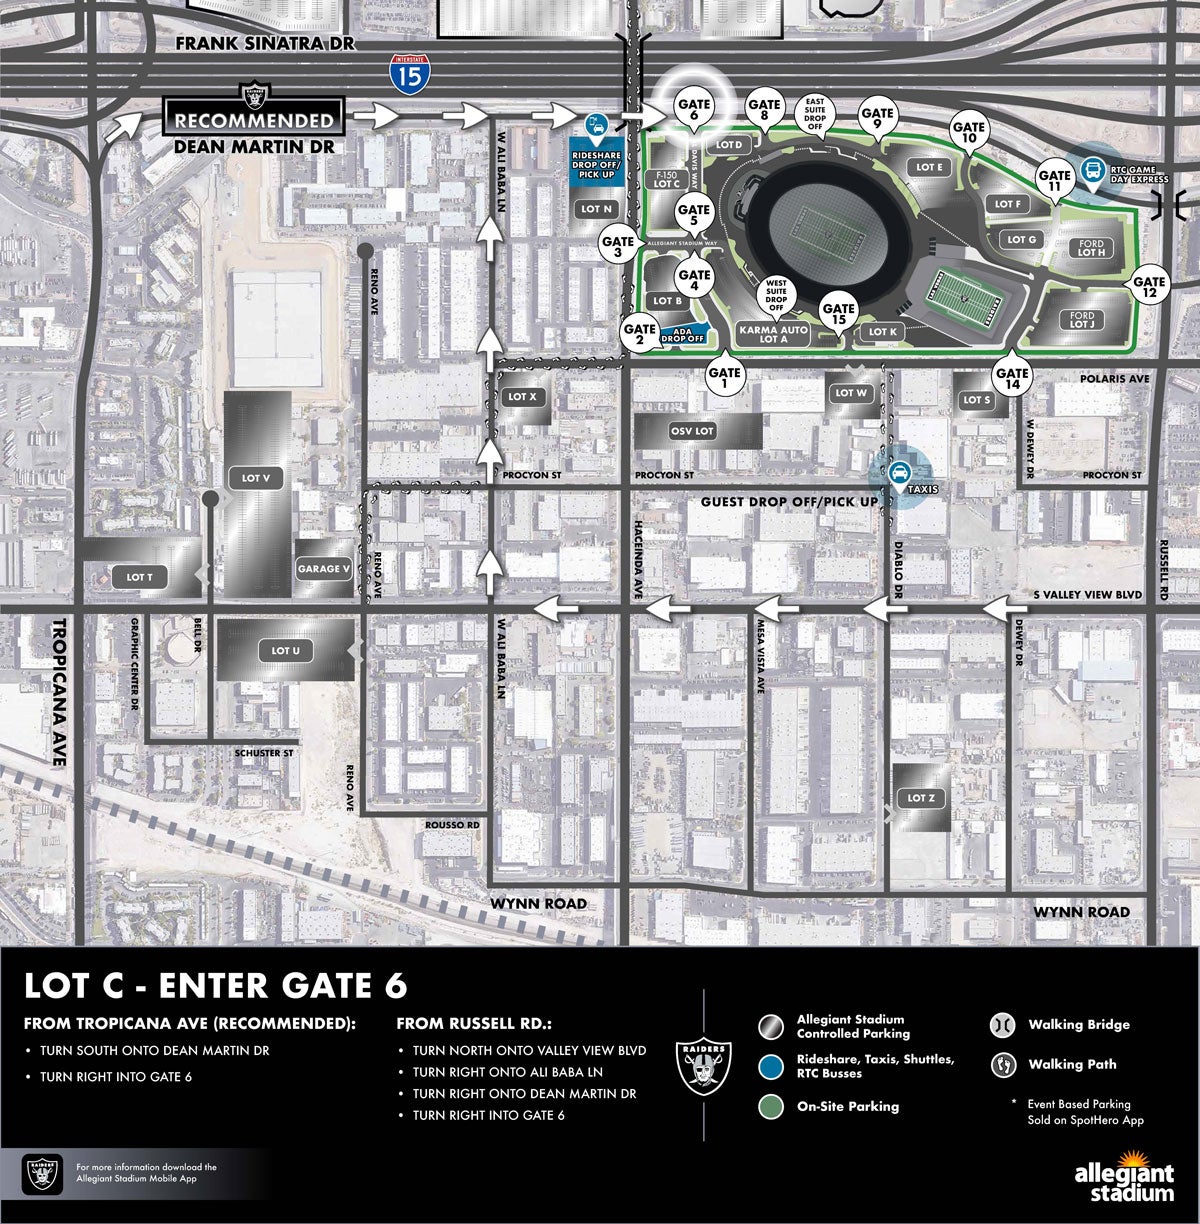 Lot C Parking Map - Enter Gate 6